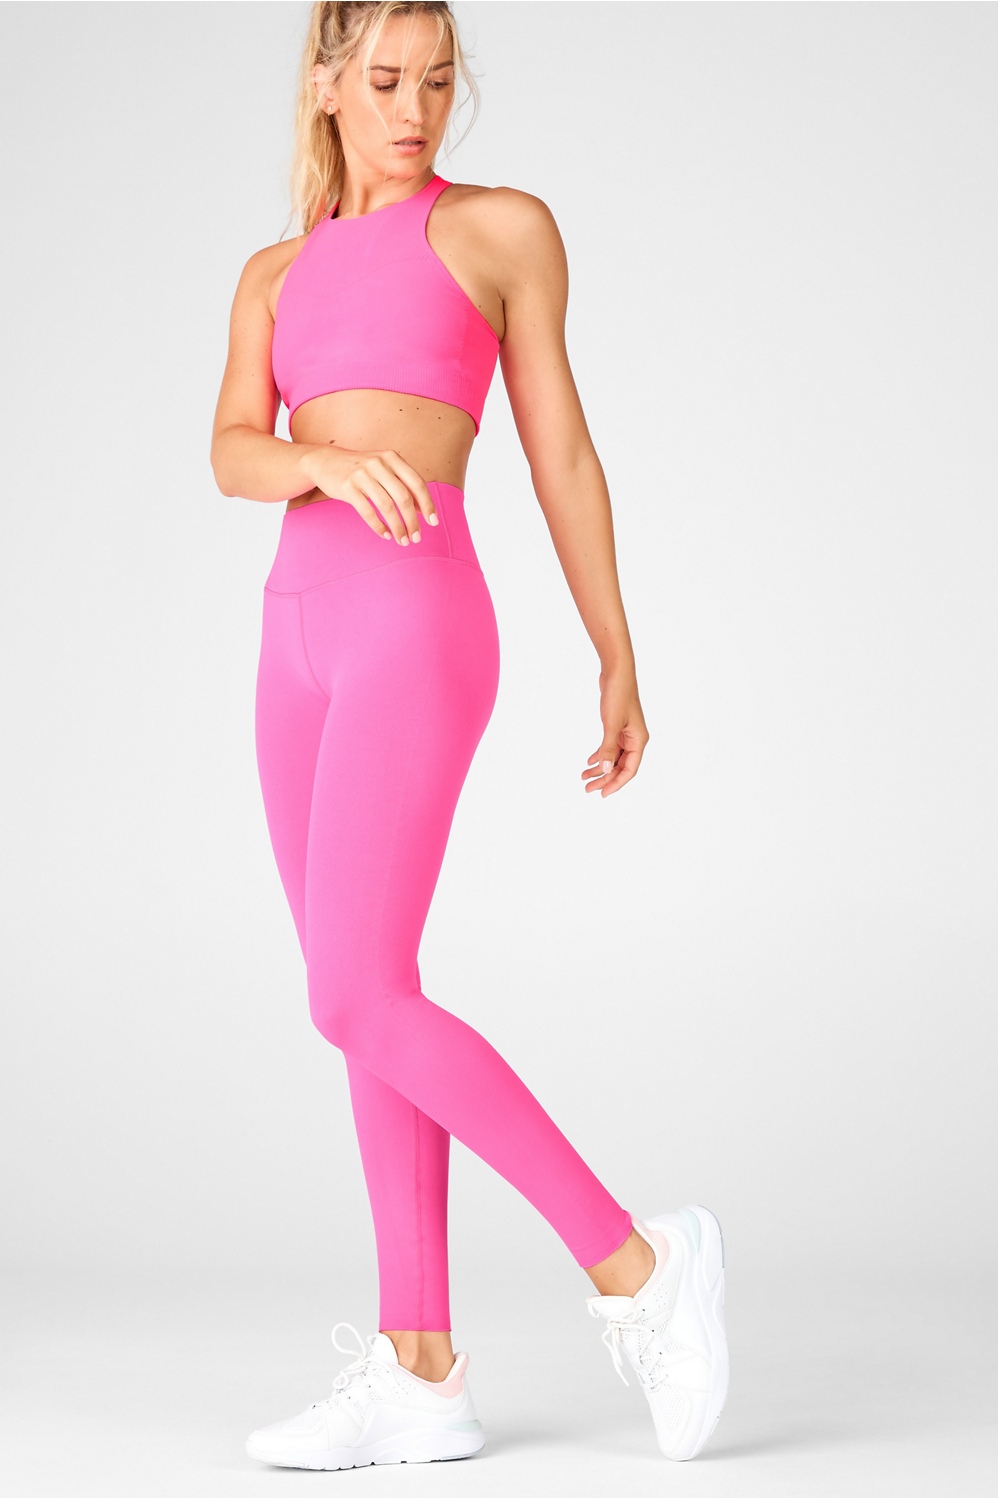 Vs pink leggings for Sale in Cedar Rapids, IA - OfferUp